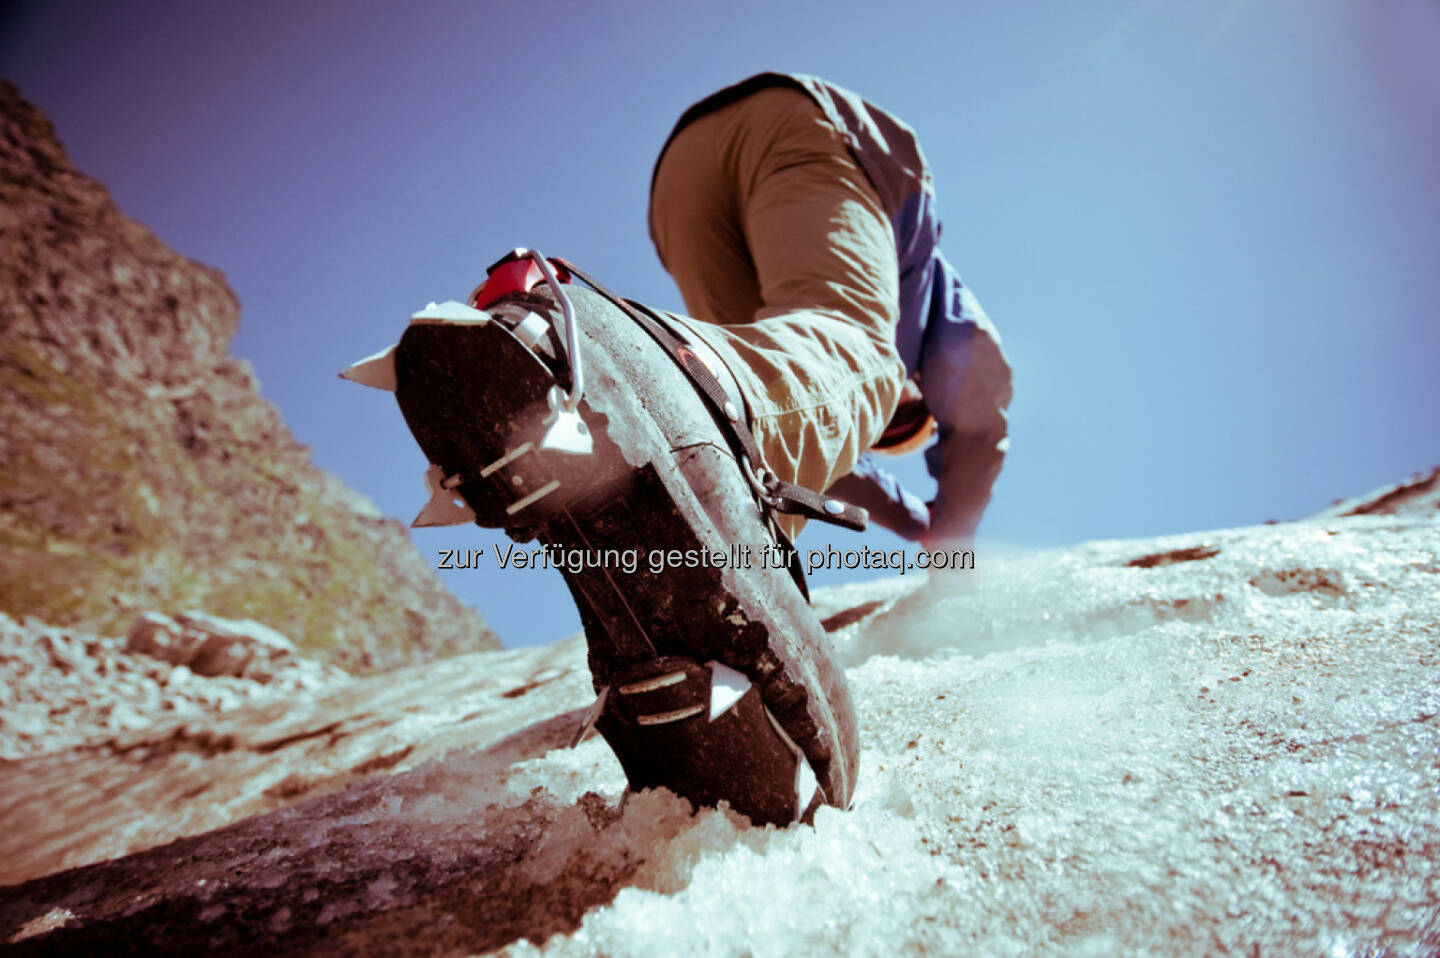 klettern, Berg, bergsteigen, hinauf, mühen, Mühsal, anstrengend, aufwärts, Gipfel, zielstrebig, vorwärts, http://www.shutterstock.com/de/pic-142022569/stock-photo-climber-climbs-on-ice.html